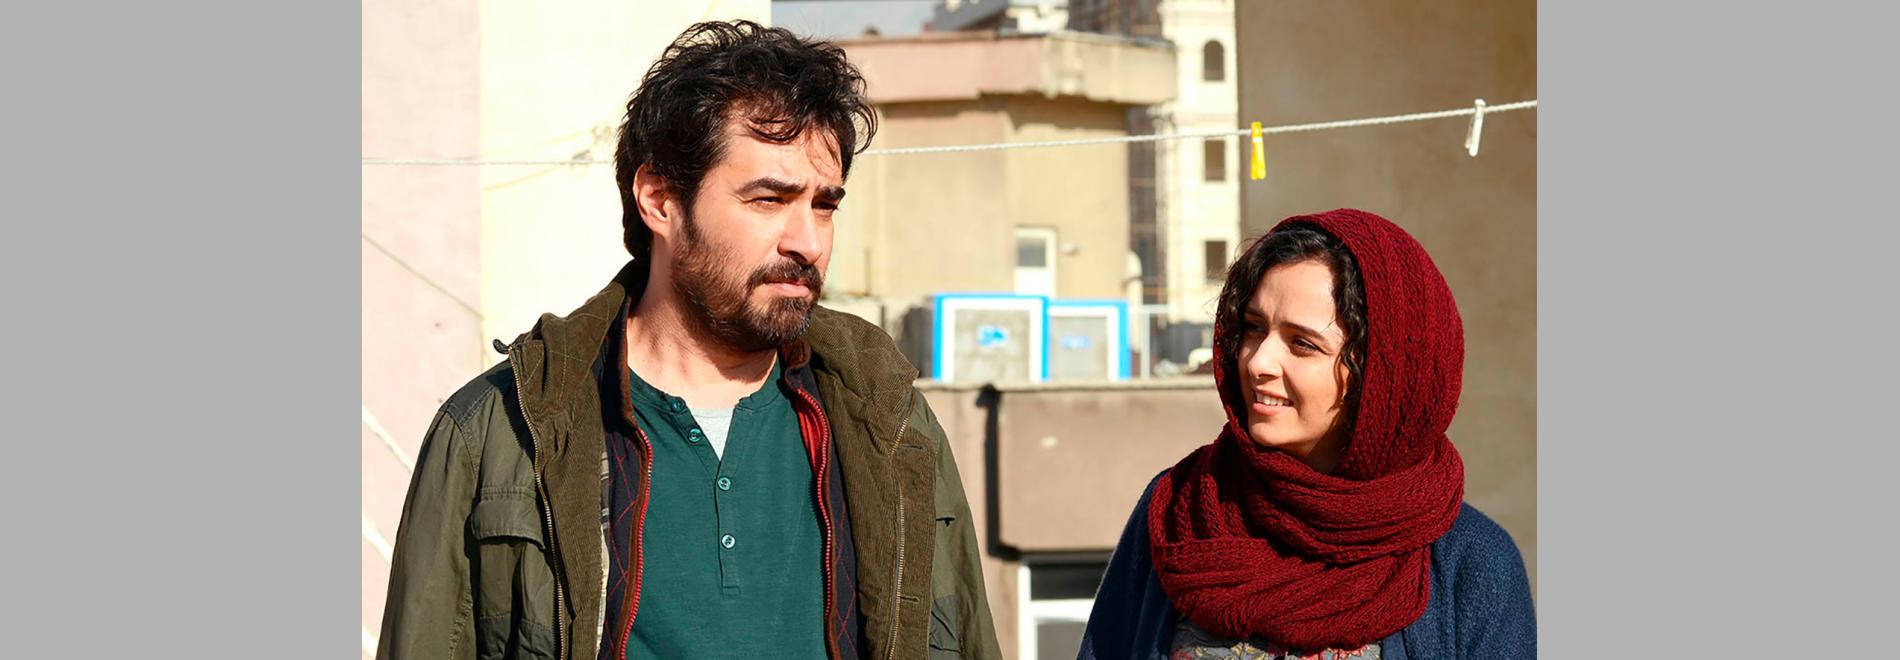 Forushande (Asghar Farhadi, 2016)